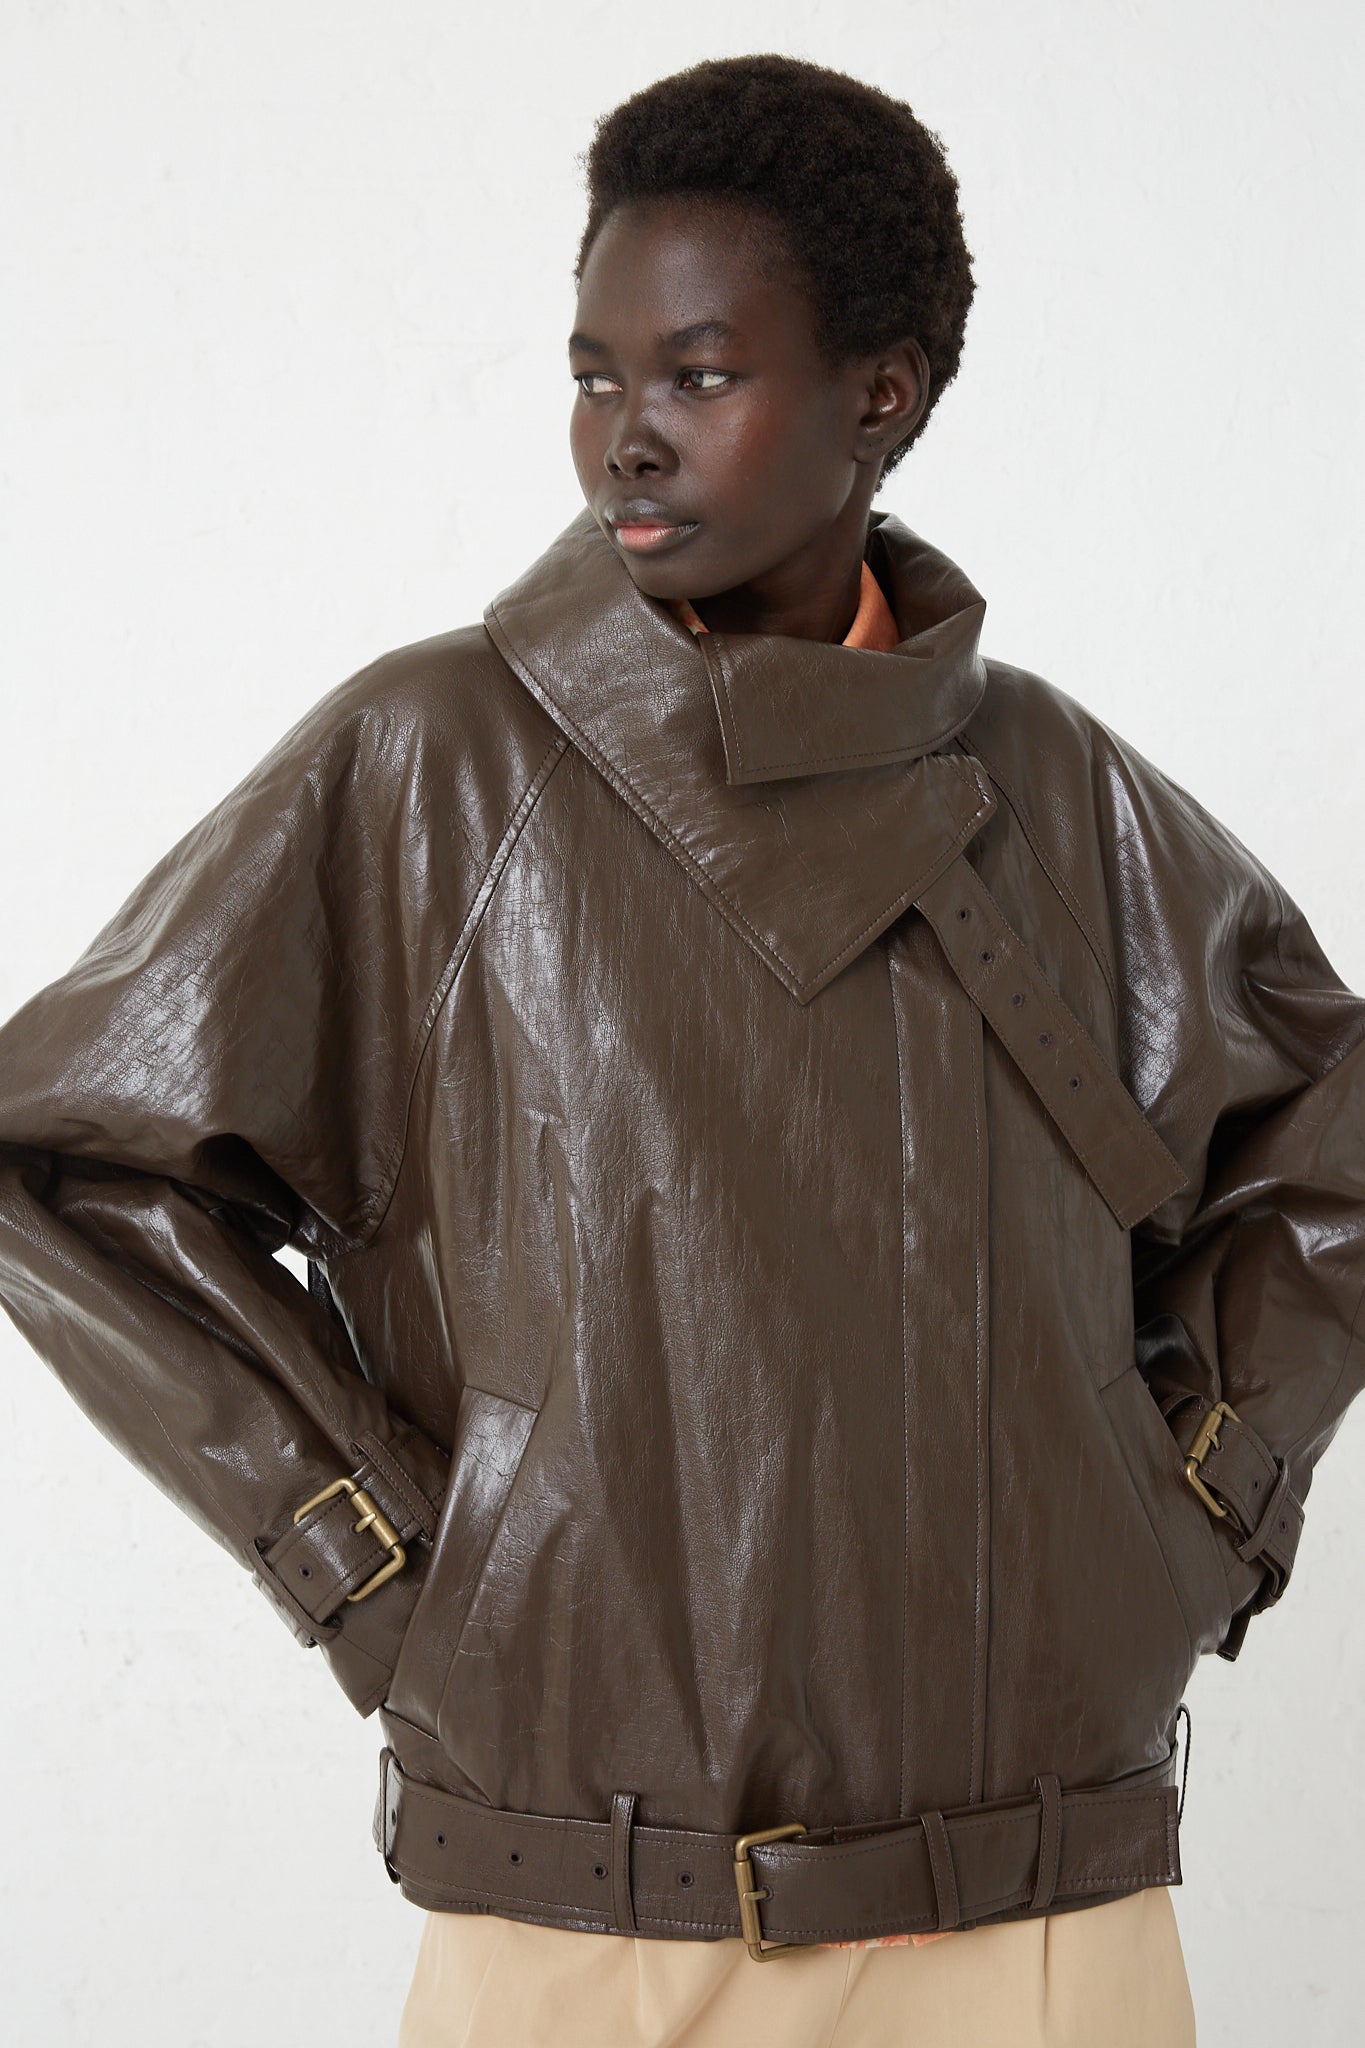 A model wearing a Faux Leather Juno Jacket in Dark Brown by Rejina Pyo.